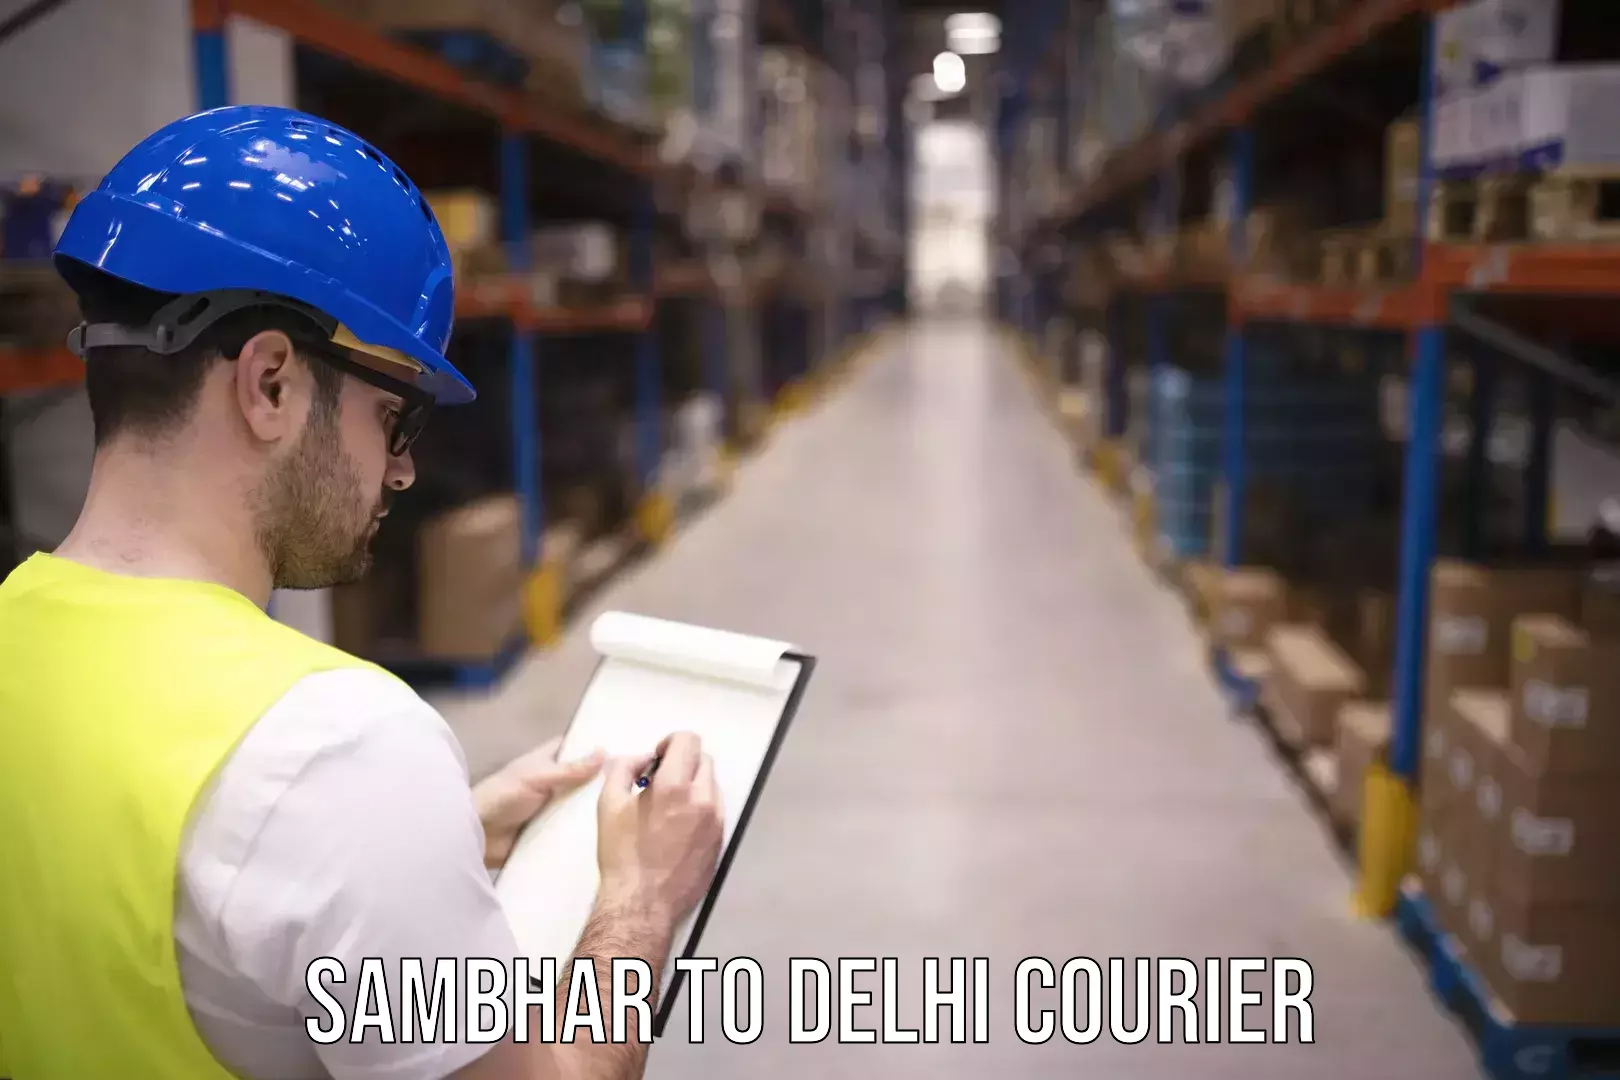 Courier service partnerships Sambhar to NCR